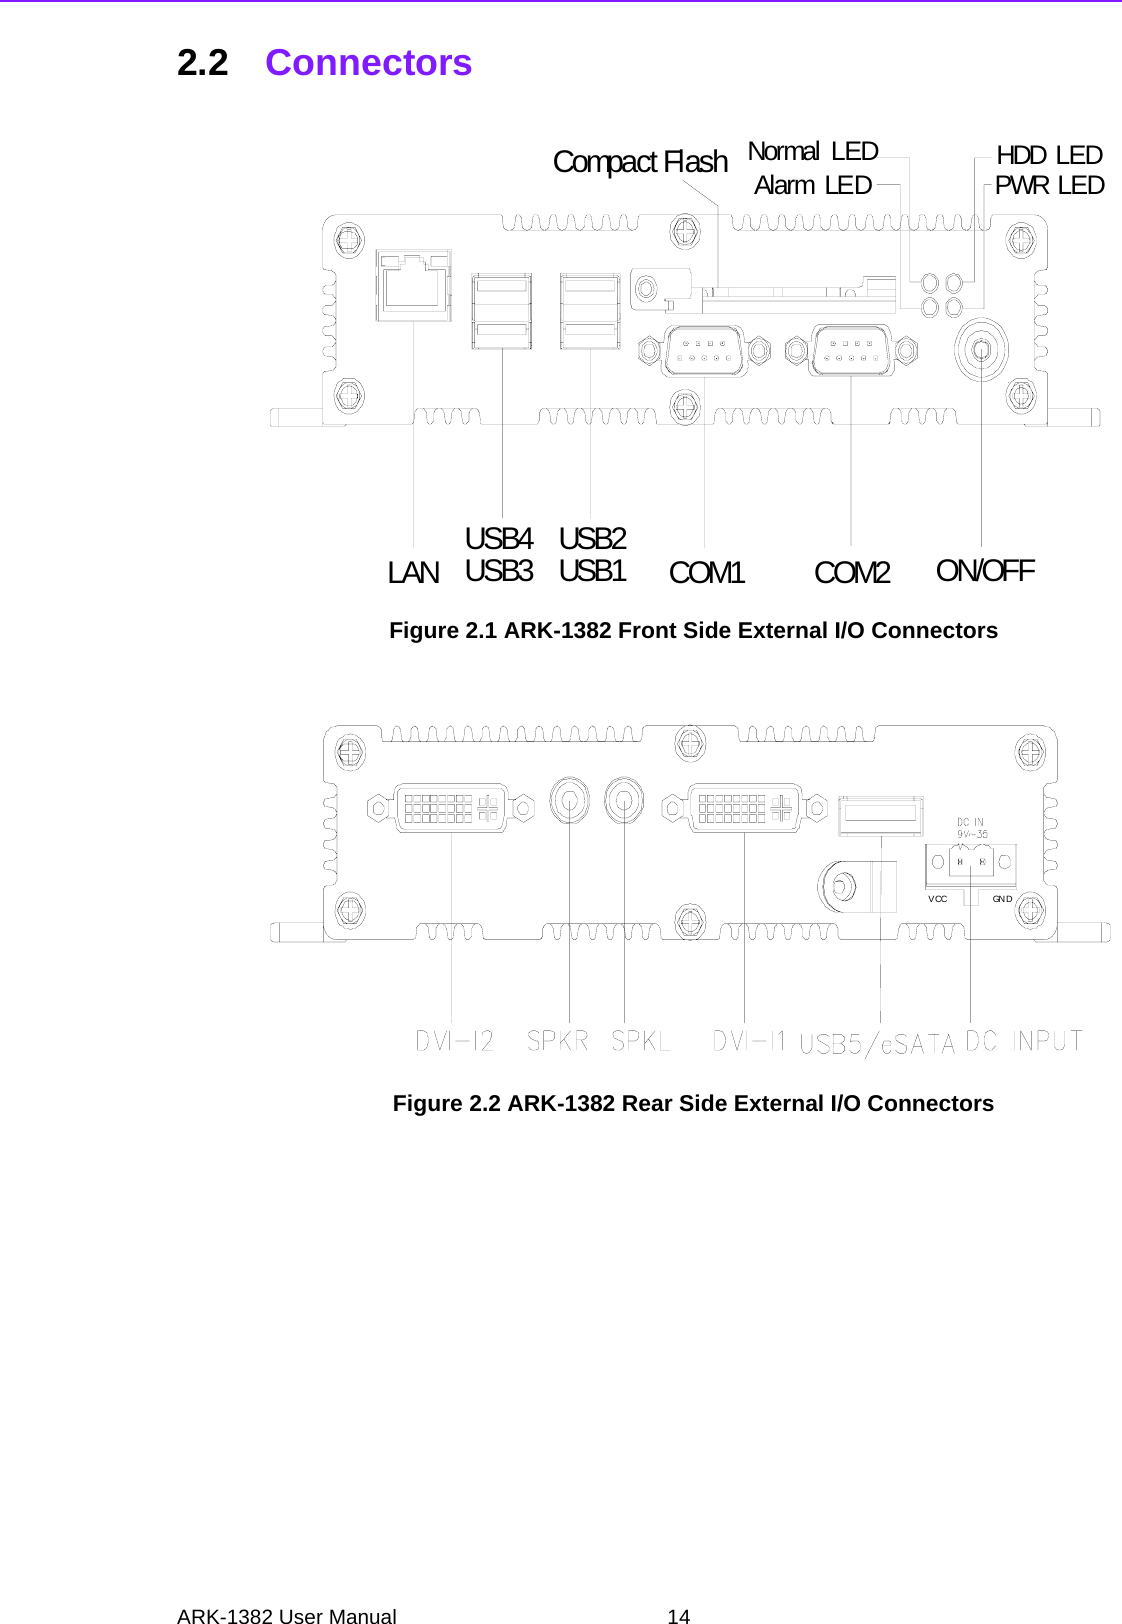 ARK-1382 User Manual 142.2 ConnectorsFigure 2.1 ARK-1382 Front Side External I/O ConnectorsFigure 2.2 ARK-1382 Rear Side External I/O ConnectorsCOM1 COM2 ON/OFFUSB4 USB2USB3 USB1LANAlarm LEDNormal LEDCompact Flash HDD LEDPWR LEDGN DVCC